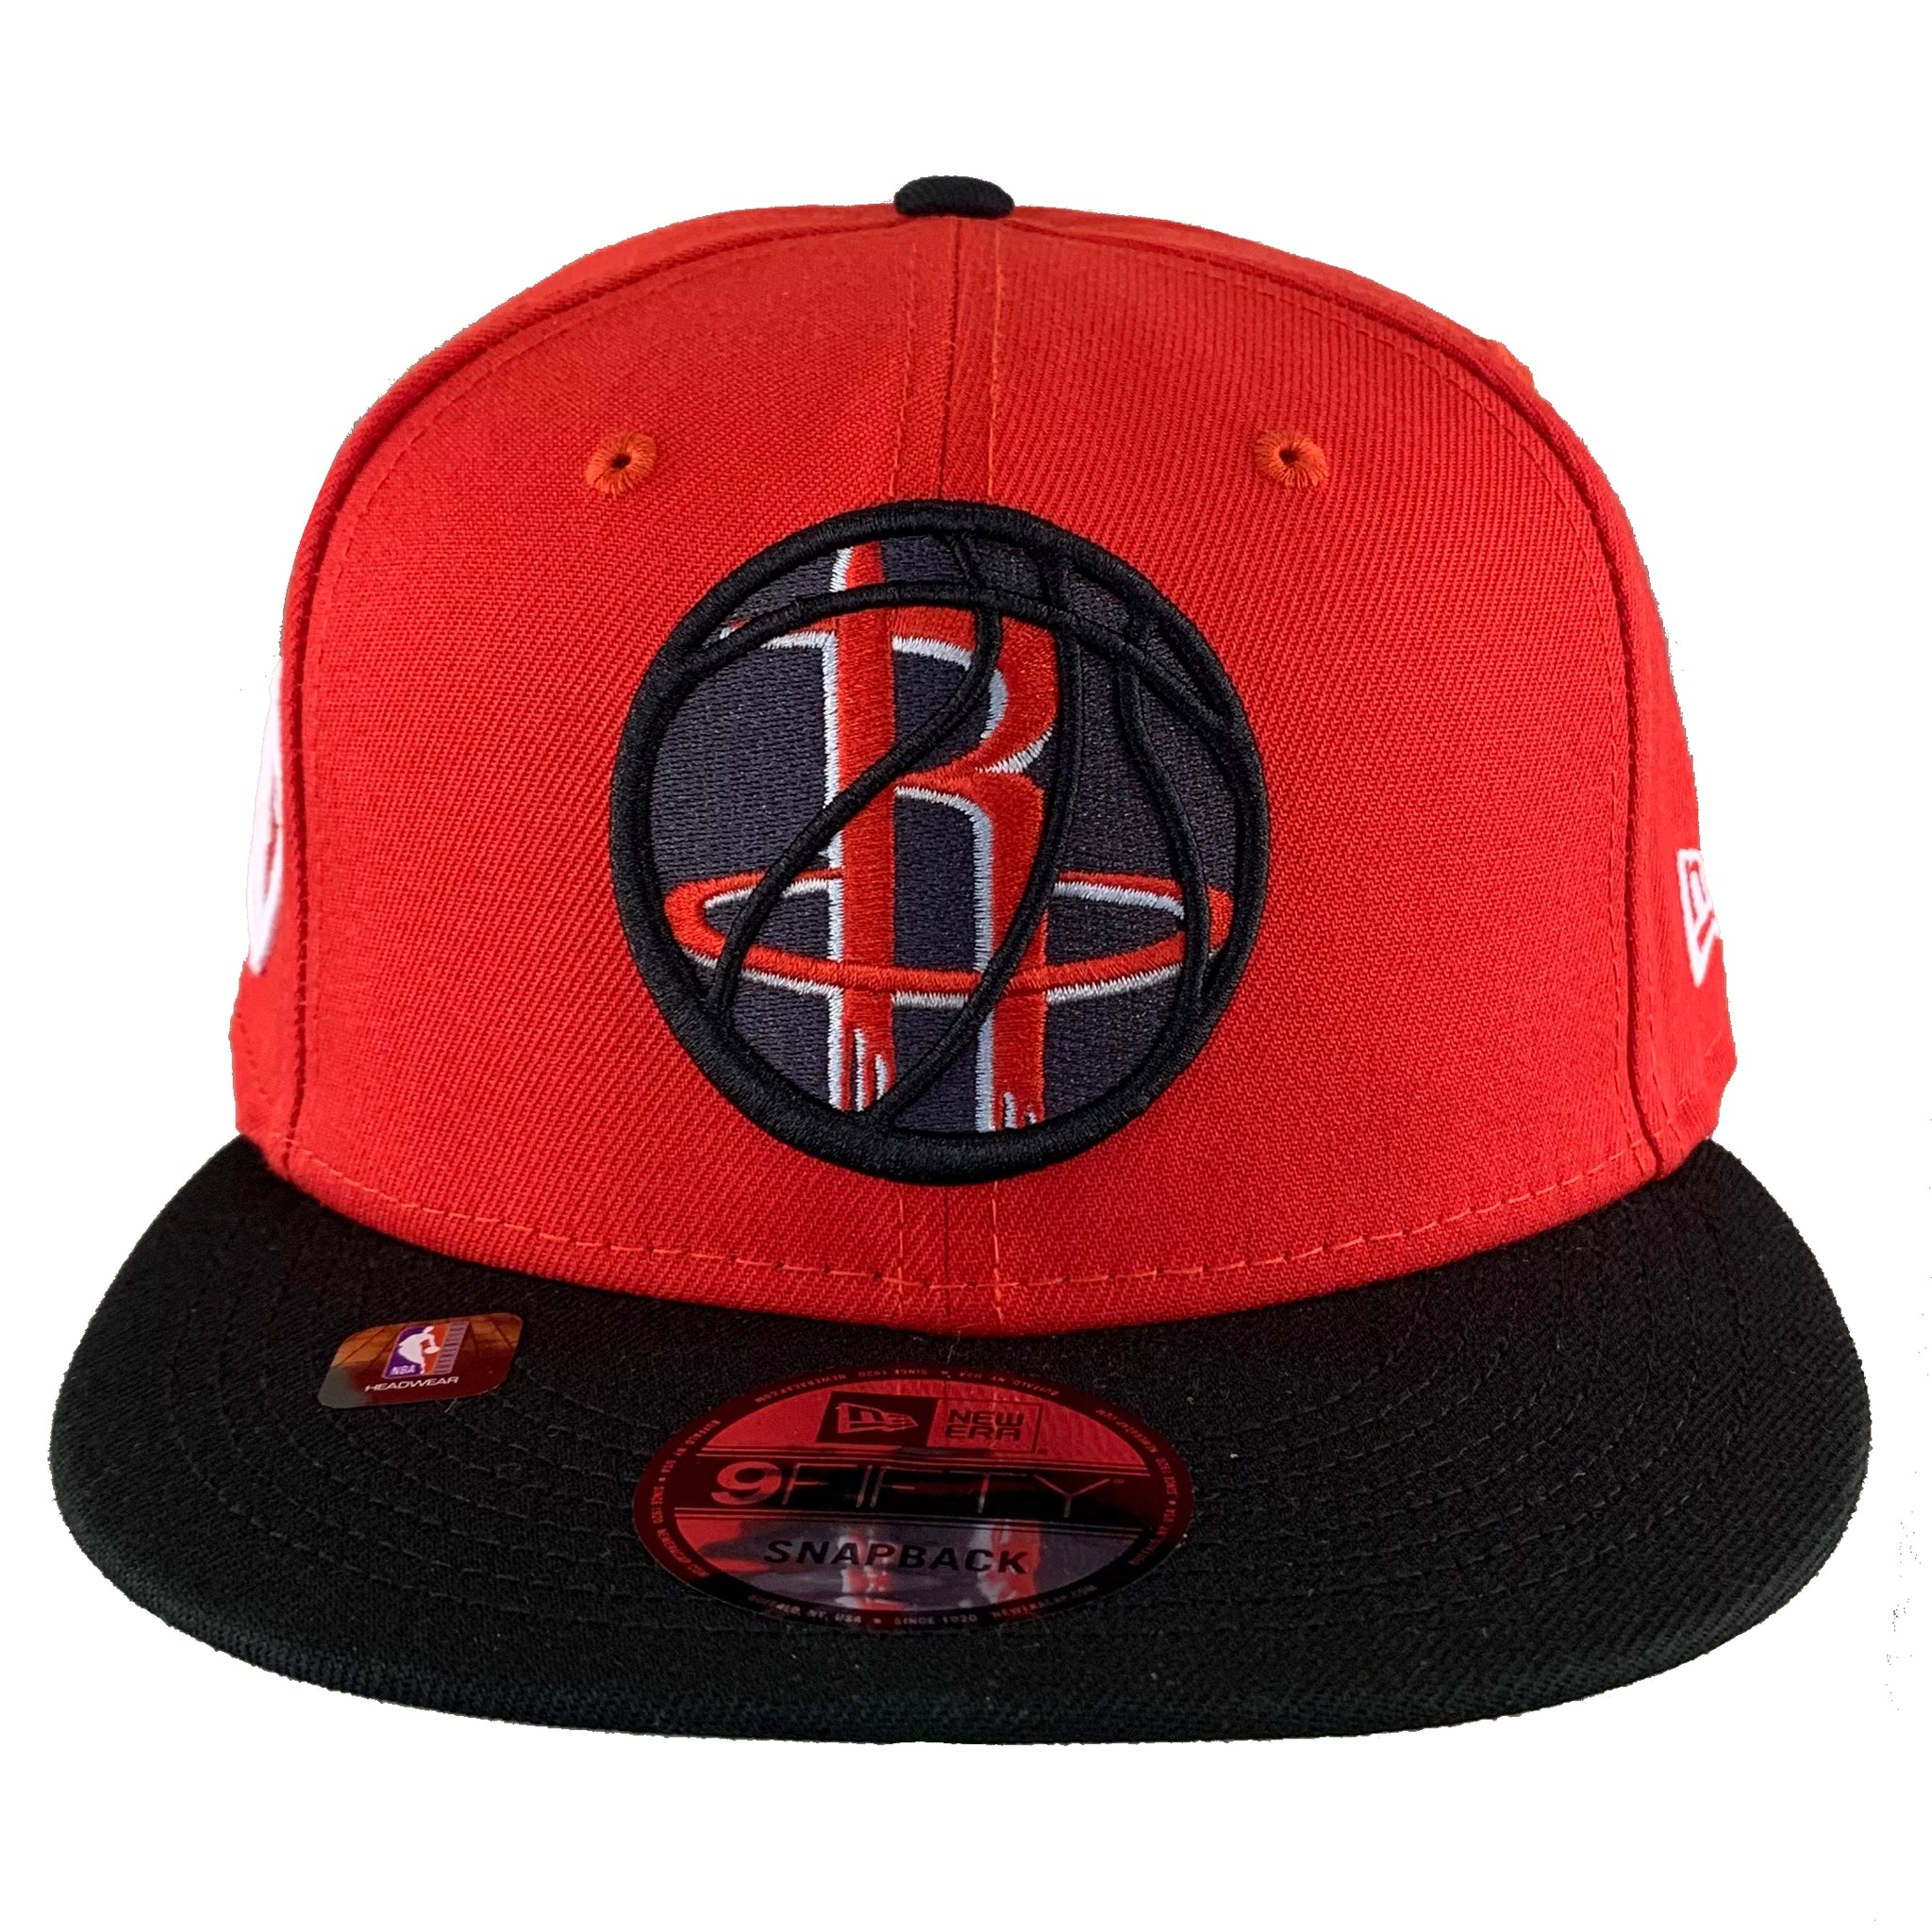 Houston Rockets 2021 NBA Draft Hat Flatbill Snapback - Red/Black